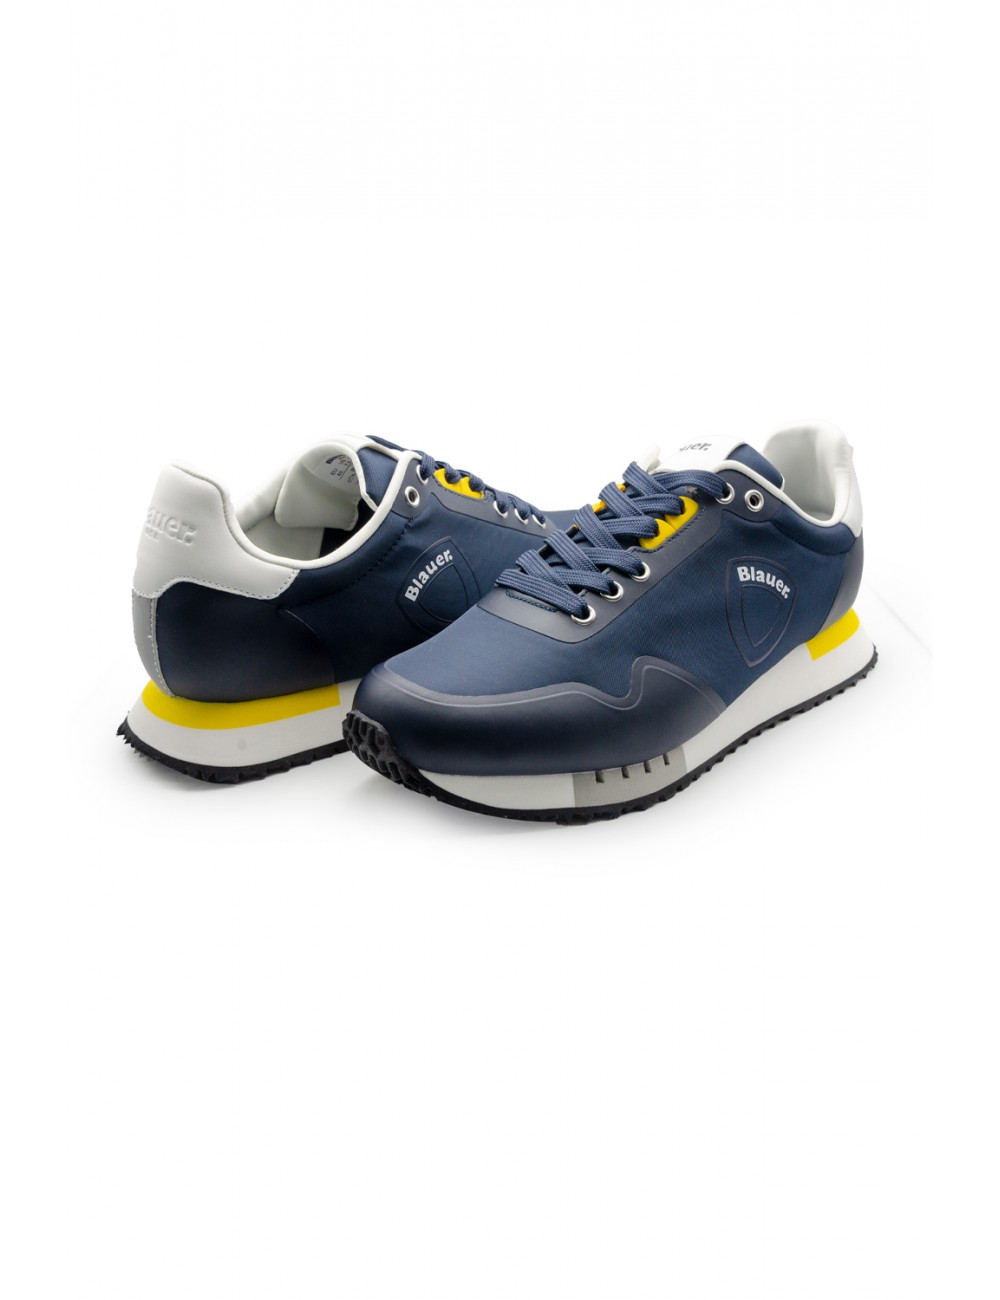 scarpe blauer UOMO NVY NAVY - S4DEXTER01/RIP DEXTER01 vista laterale